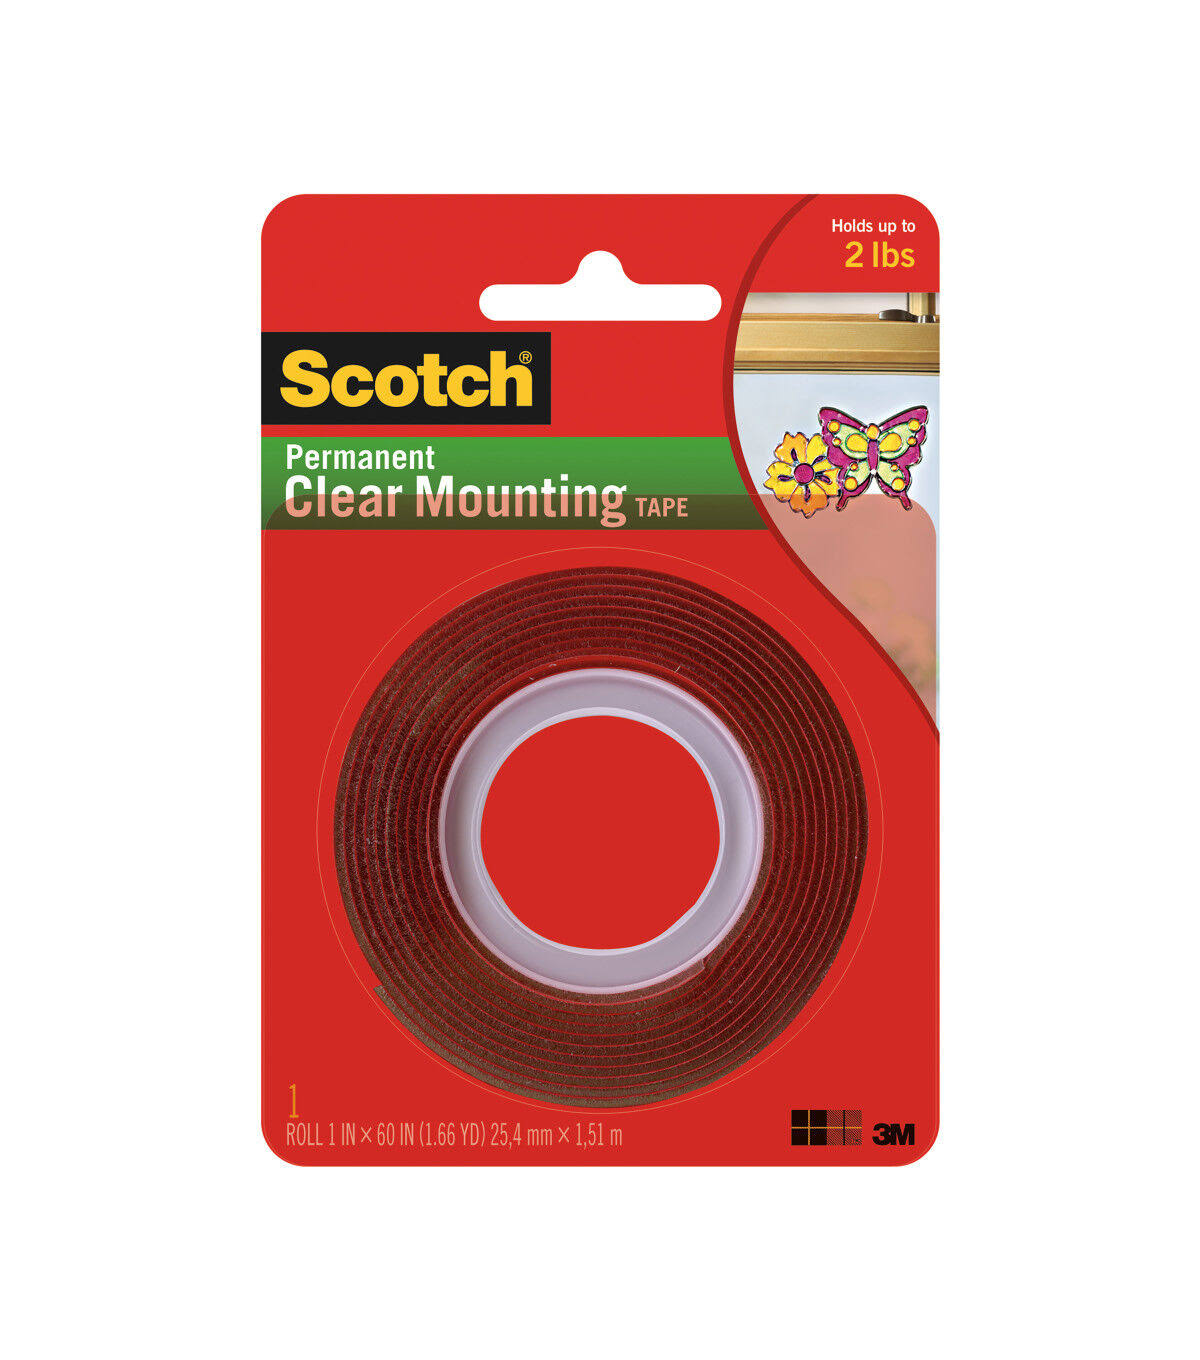 3M Scotch Heavy Duty Mounting Tape - Clear, 1" Width x 5ft Length